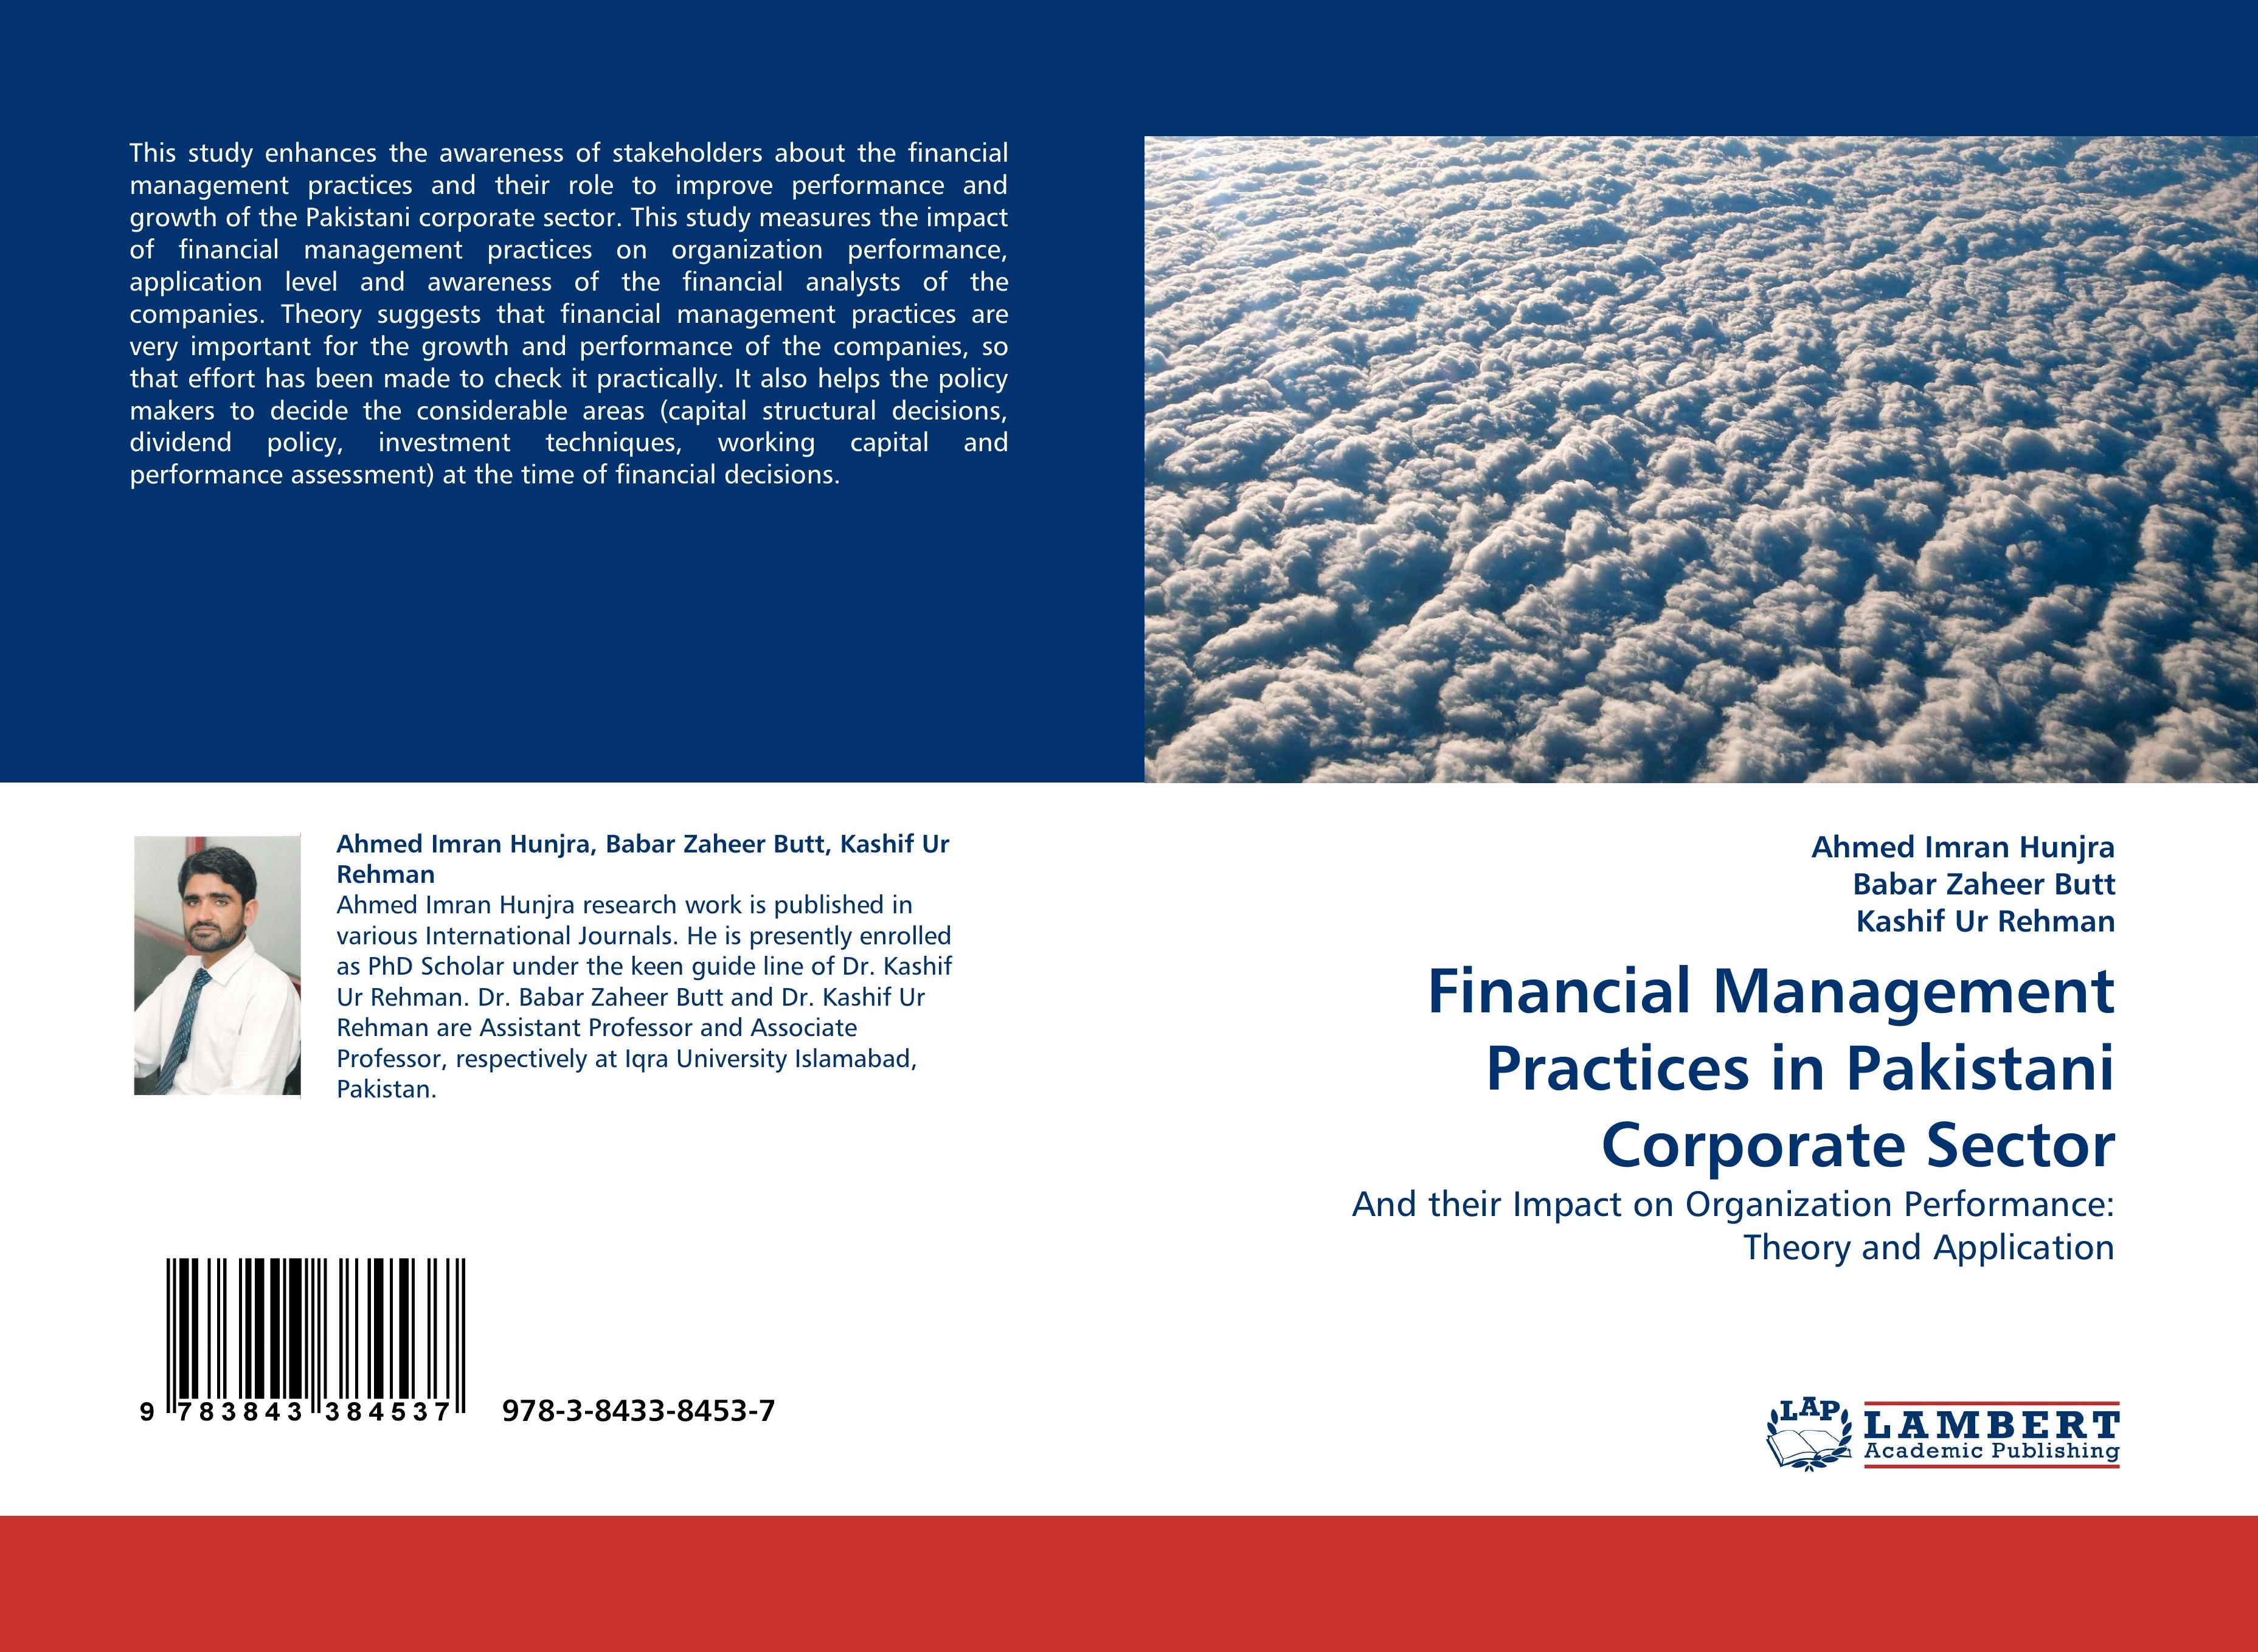 Financial Management Practices in Pakistani Corporate Sector - Ahmed Imran Hunjra Babar Zaheer Butt Kashif Ur Rehman